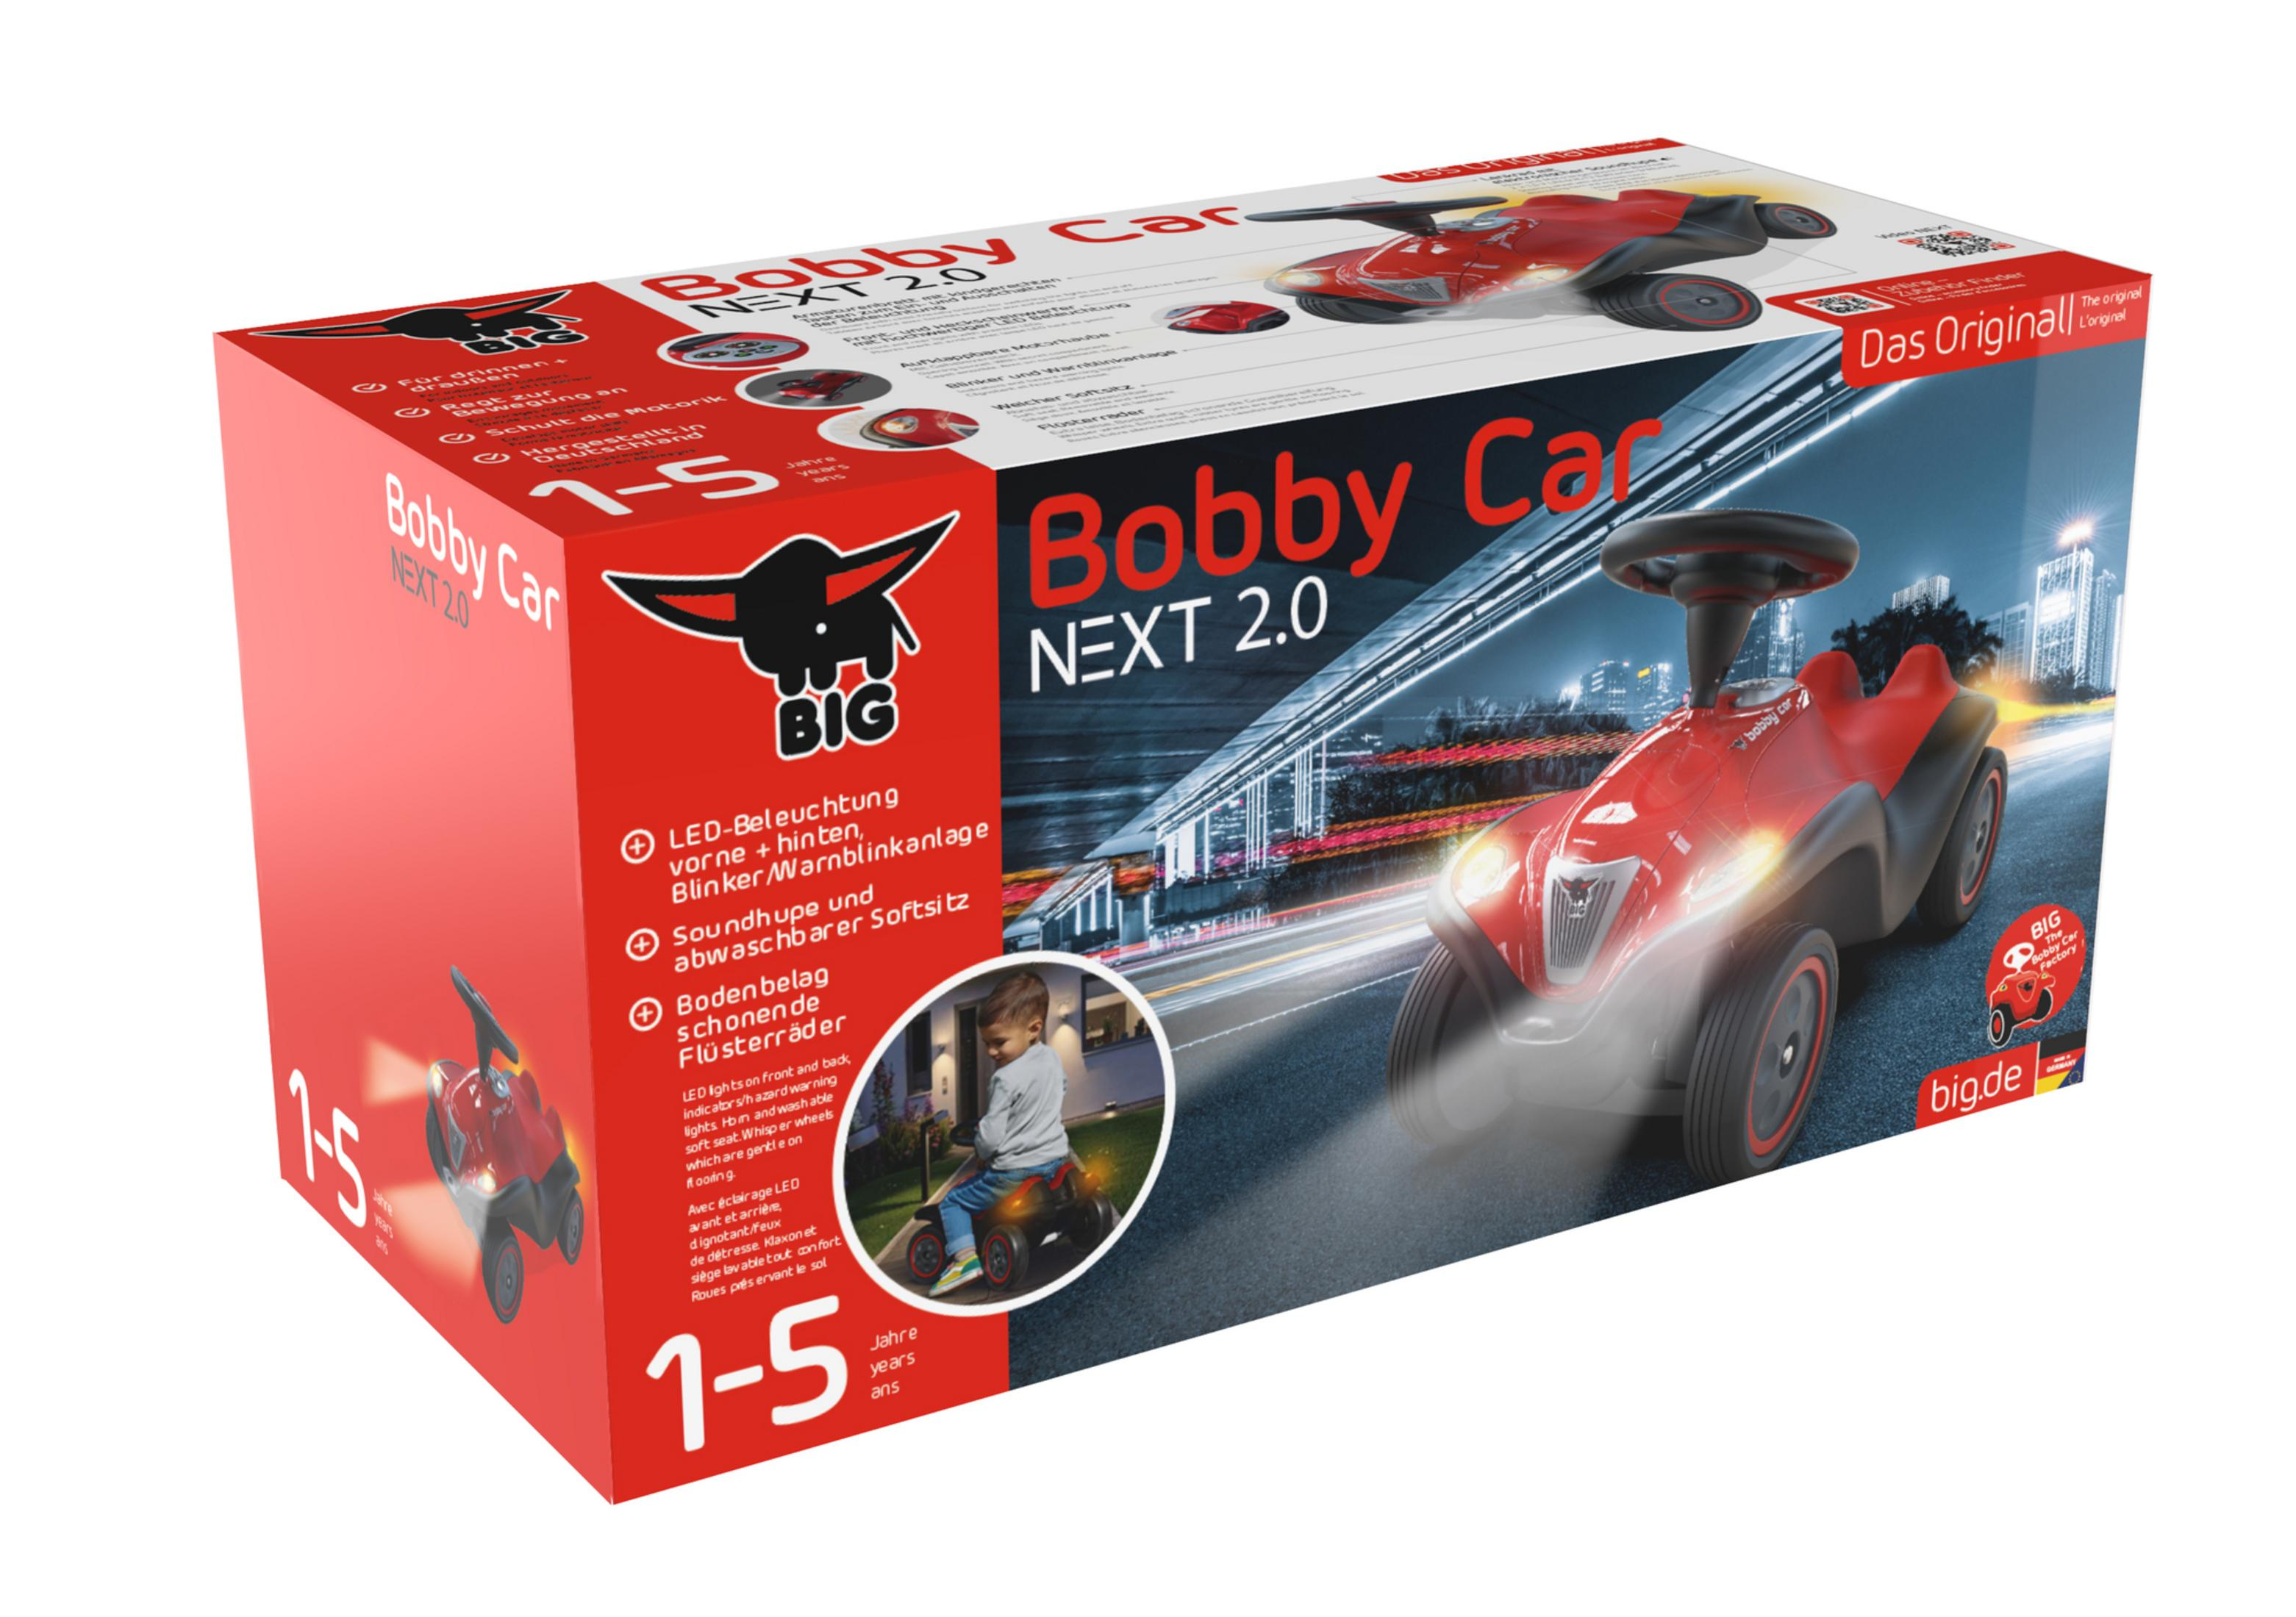 BIG 800056238 BIG BOBBY CAR ROT 2.0 NEXT Rot Rutschfahrzeug